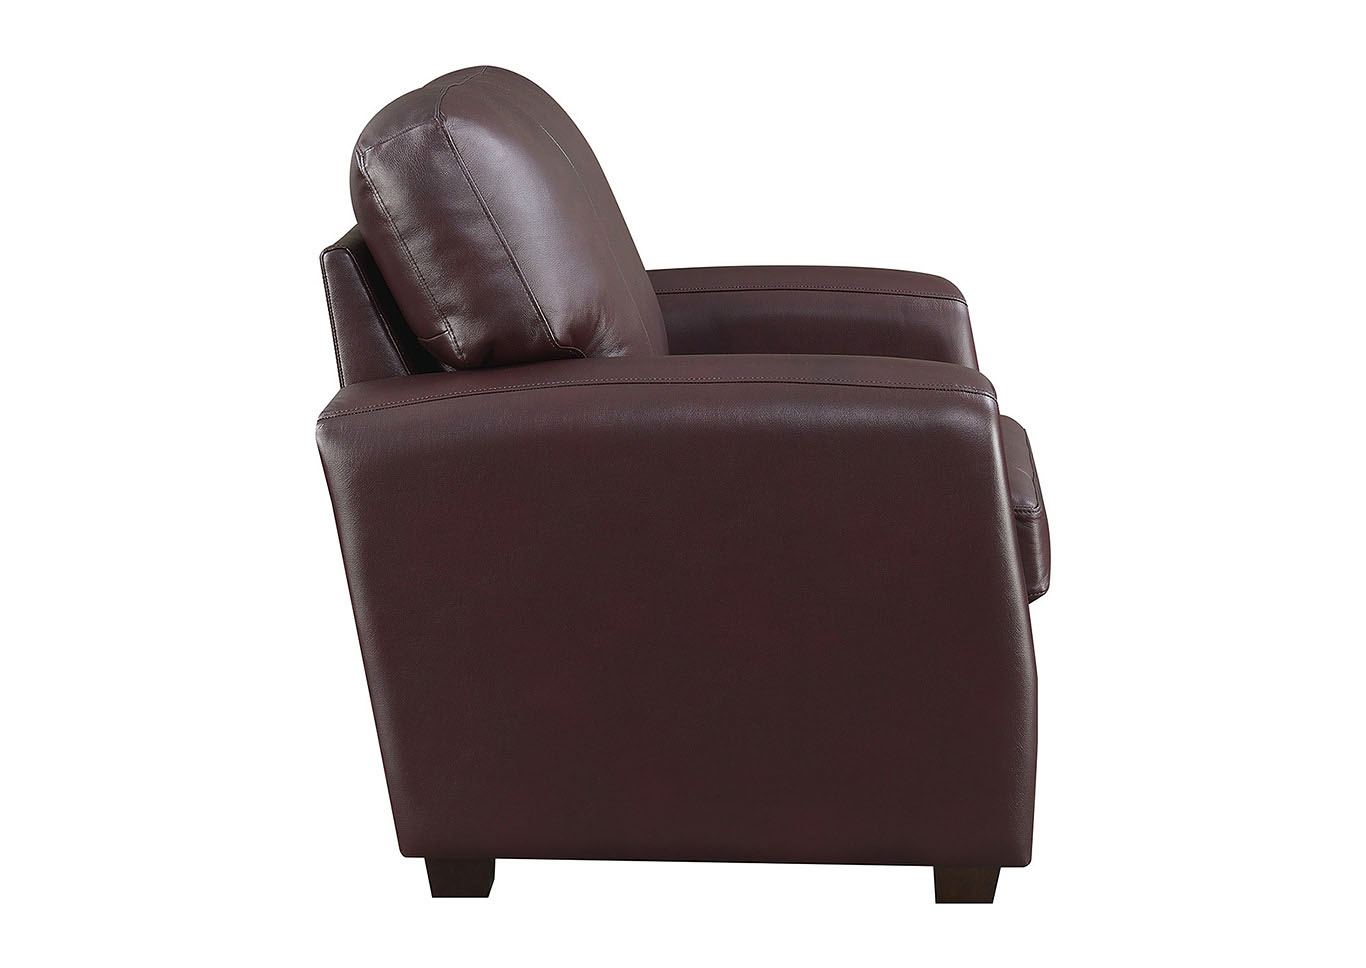 Stephanie Burgundy Leather Match Stationary Chair,Taba Home Furnishings